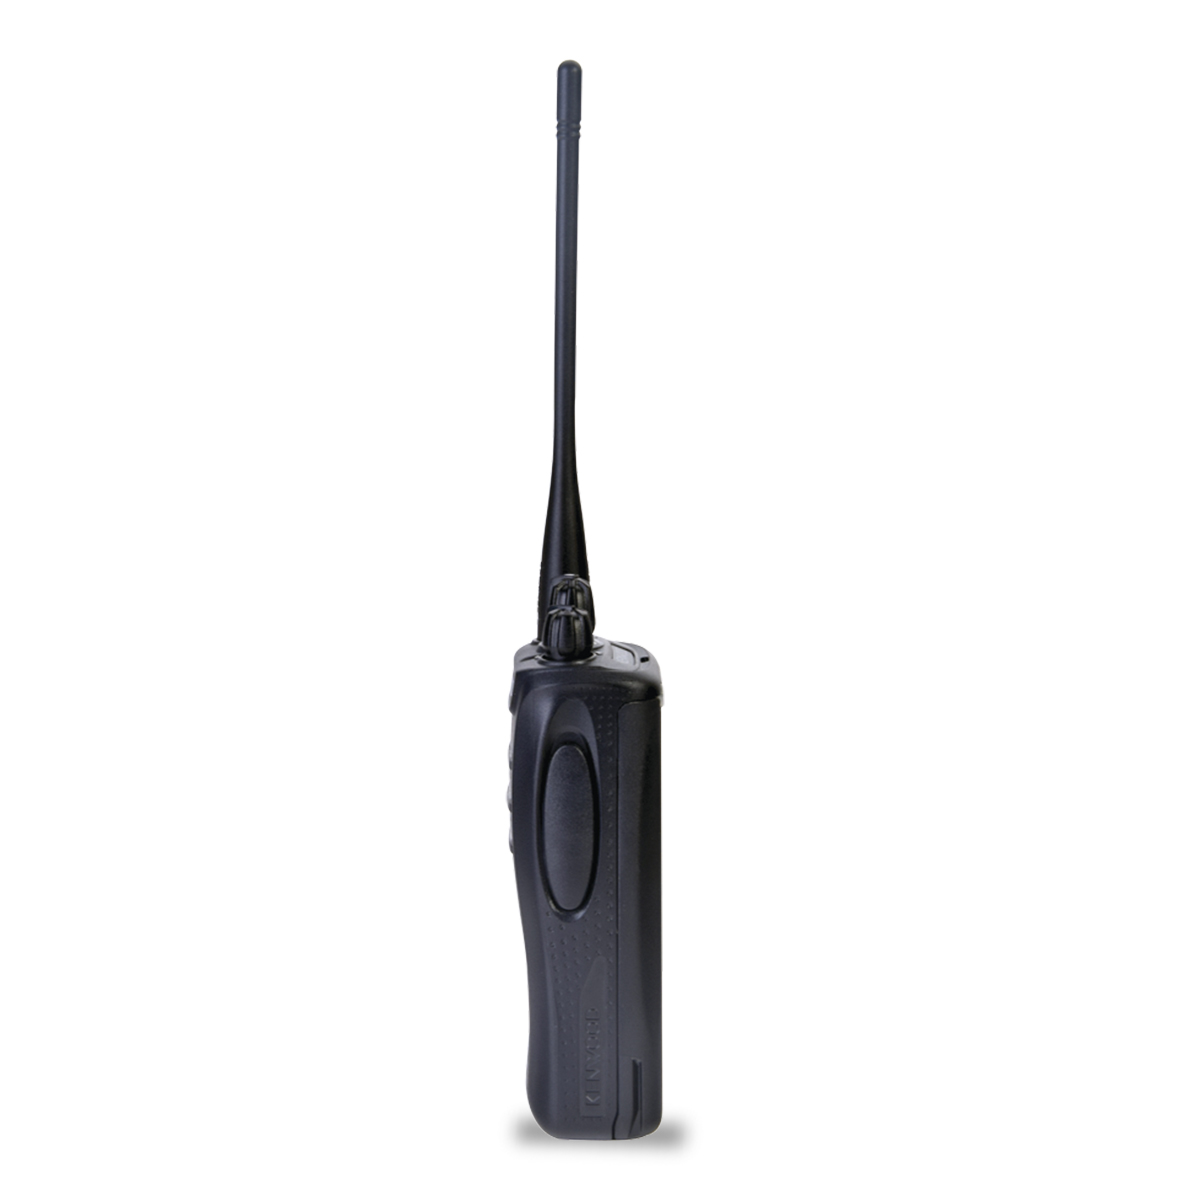 Radio KENWOOD NX-240 Digital VHF 136-174 MHz